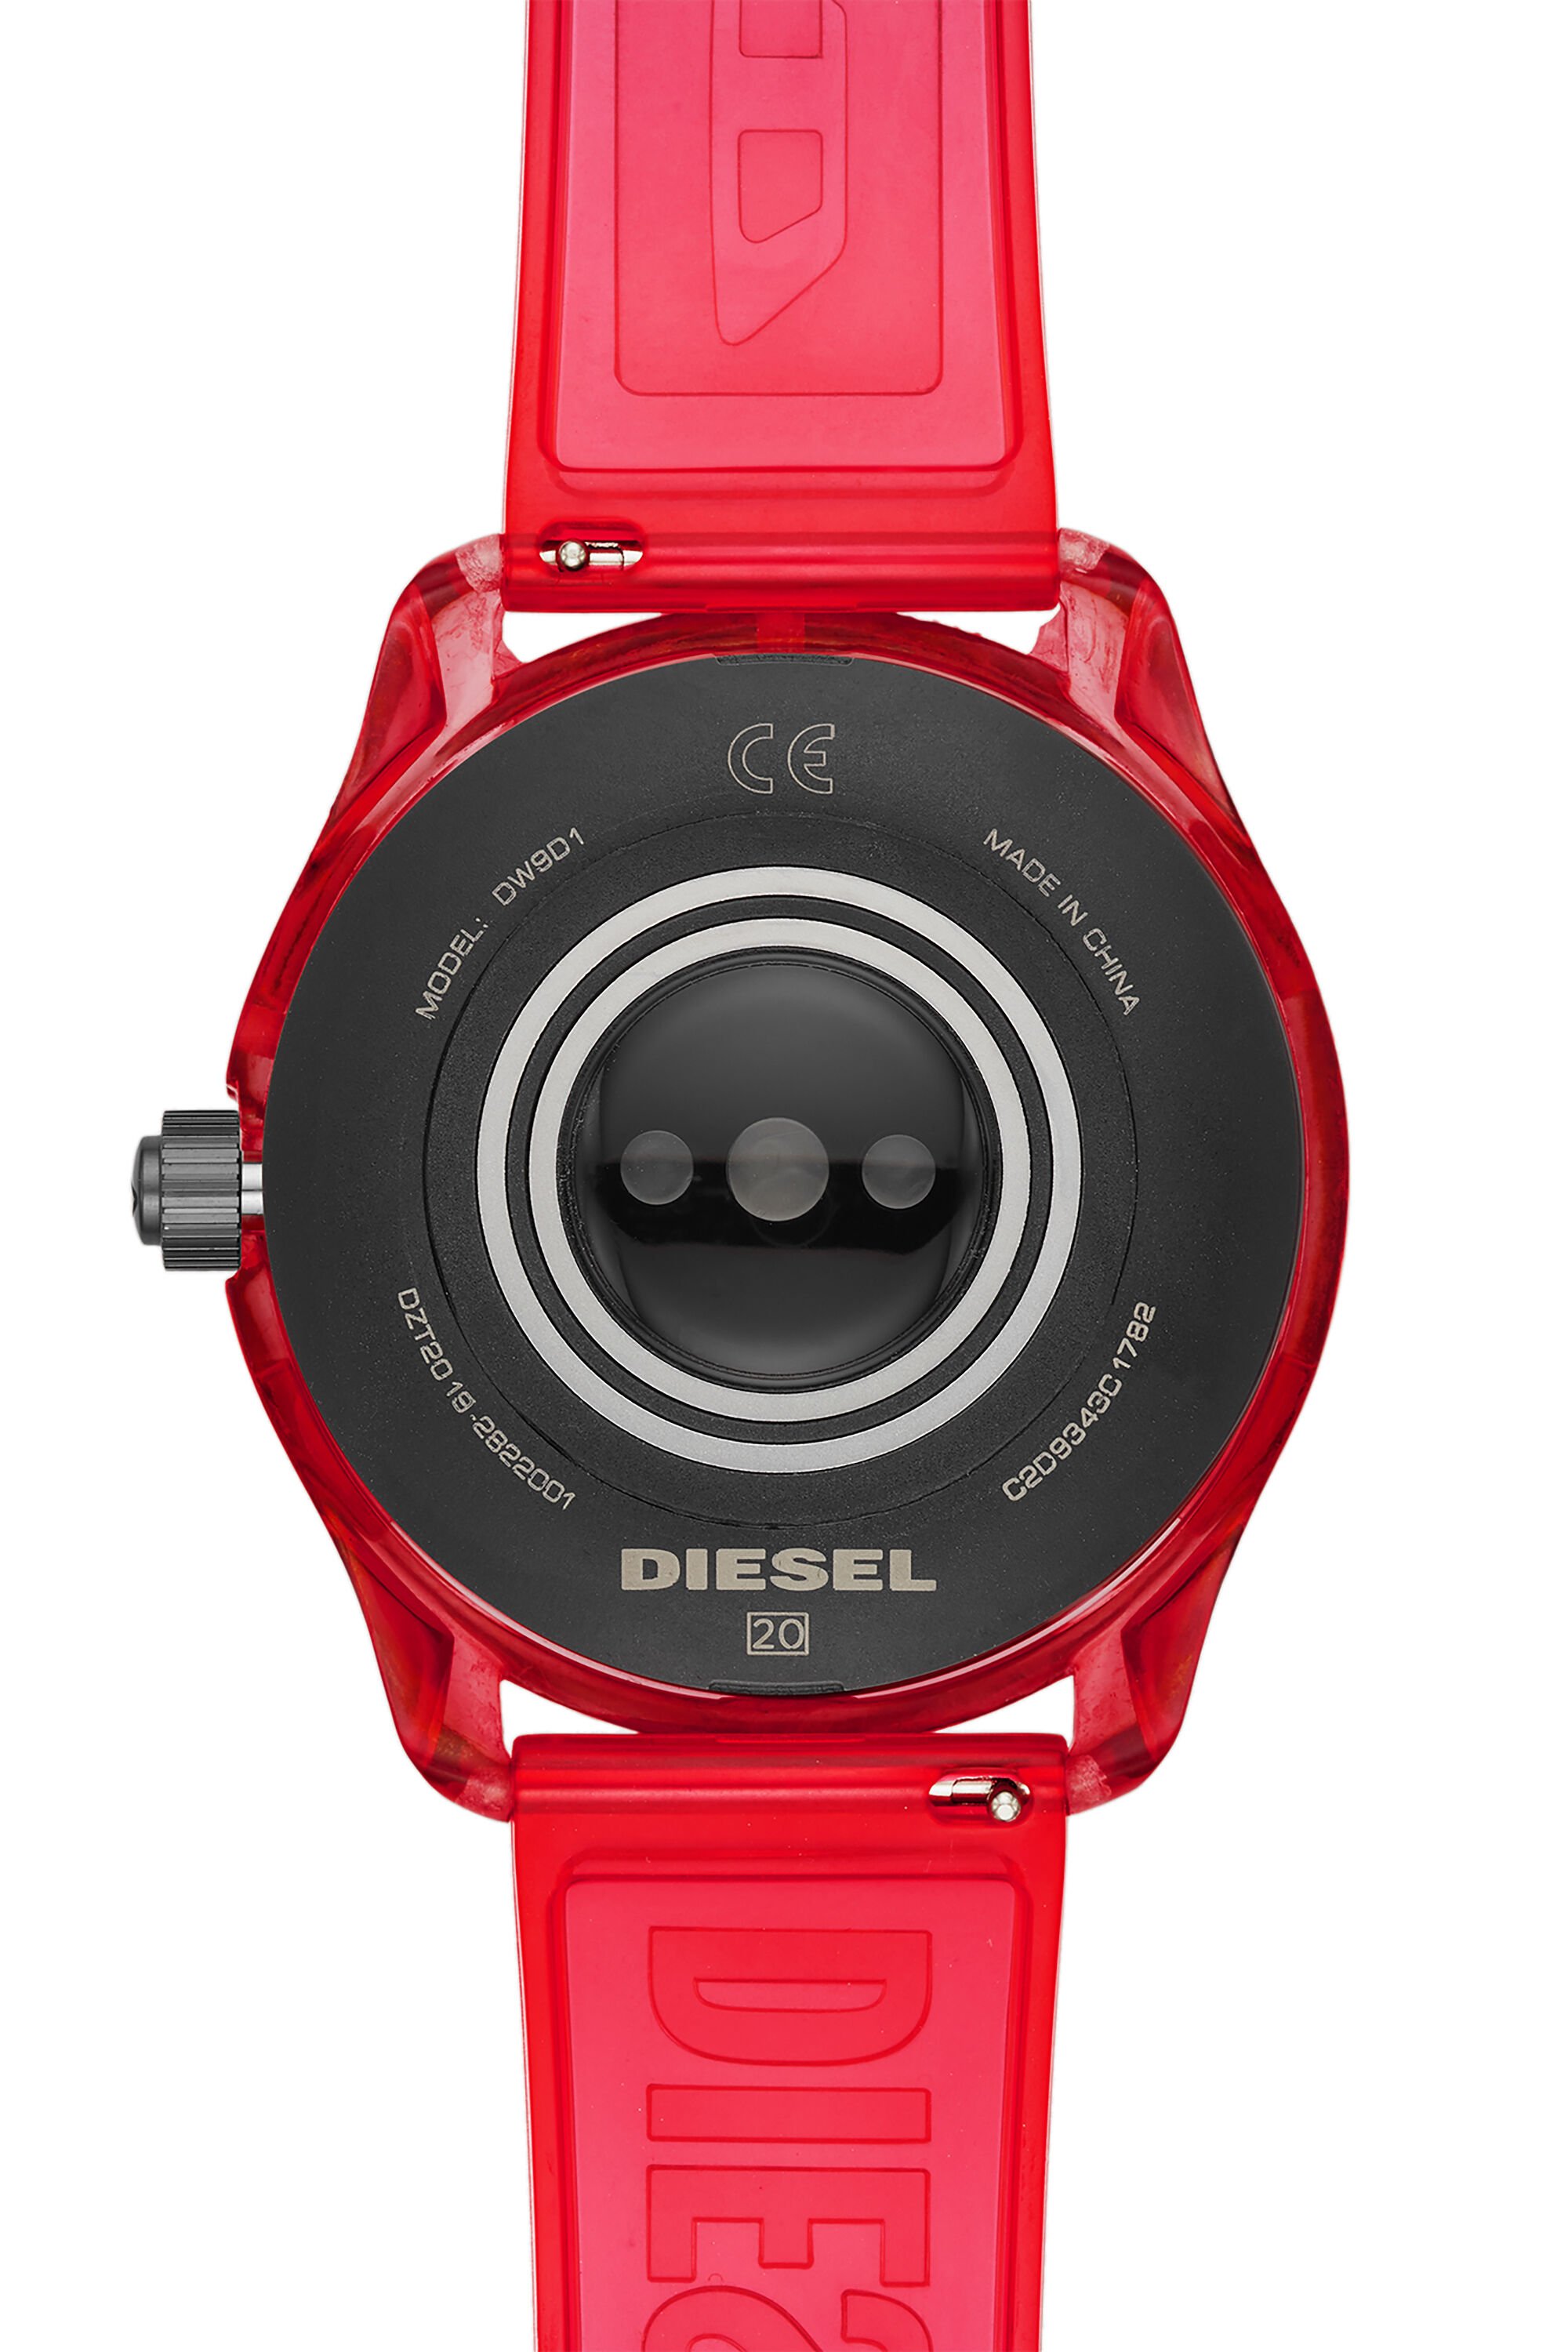 Diesel - DT2019, Man Diesel On Fadelite Smartwatch - Red Transparent in Red - Image 4